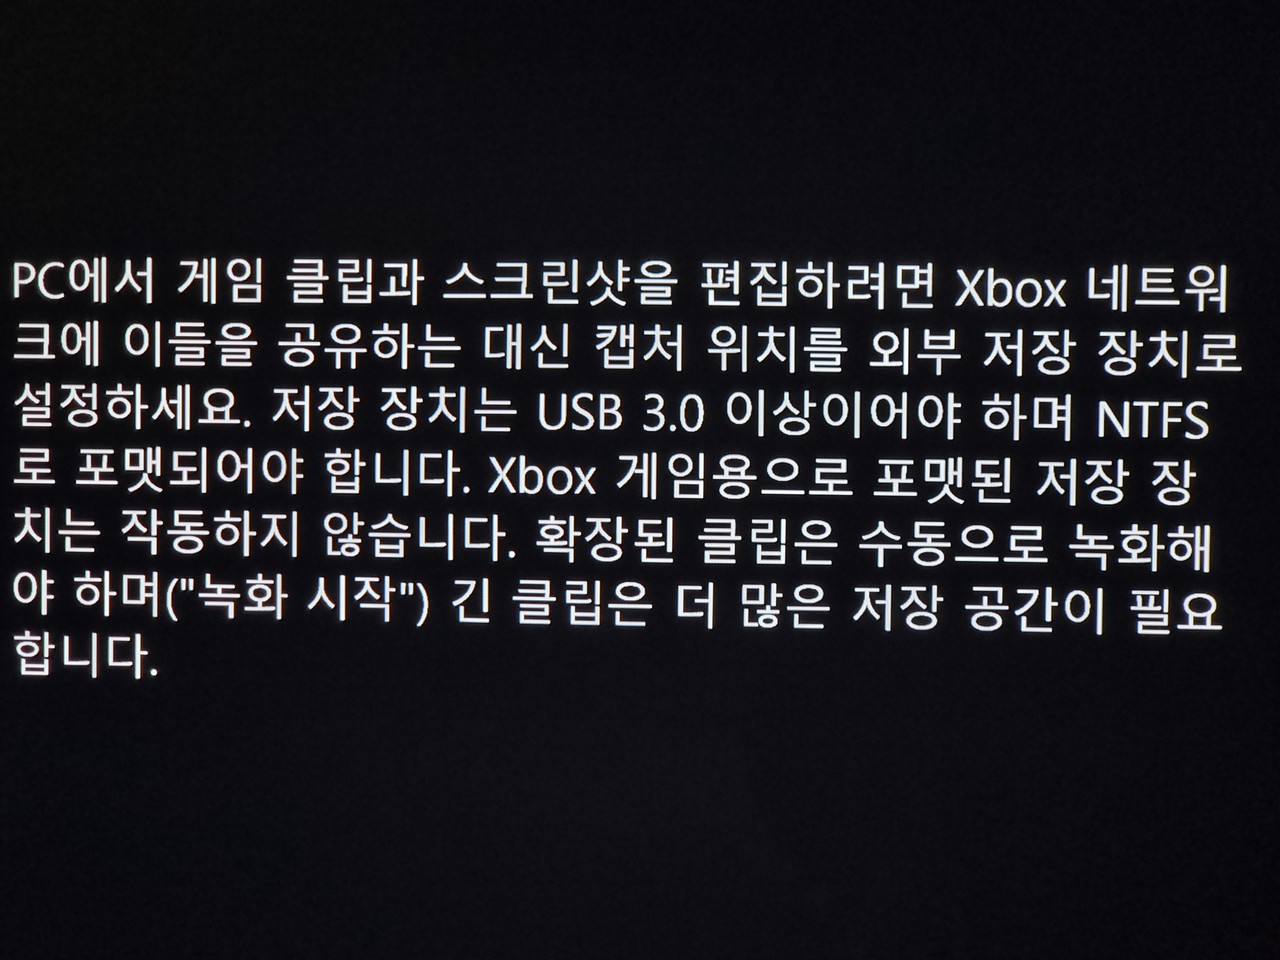 ▲ Xbox 게임용을 선택하면 영상 녹화용 드라이브로 활용할 수 없다.